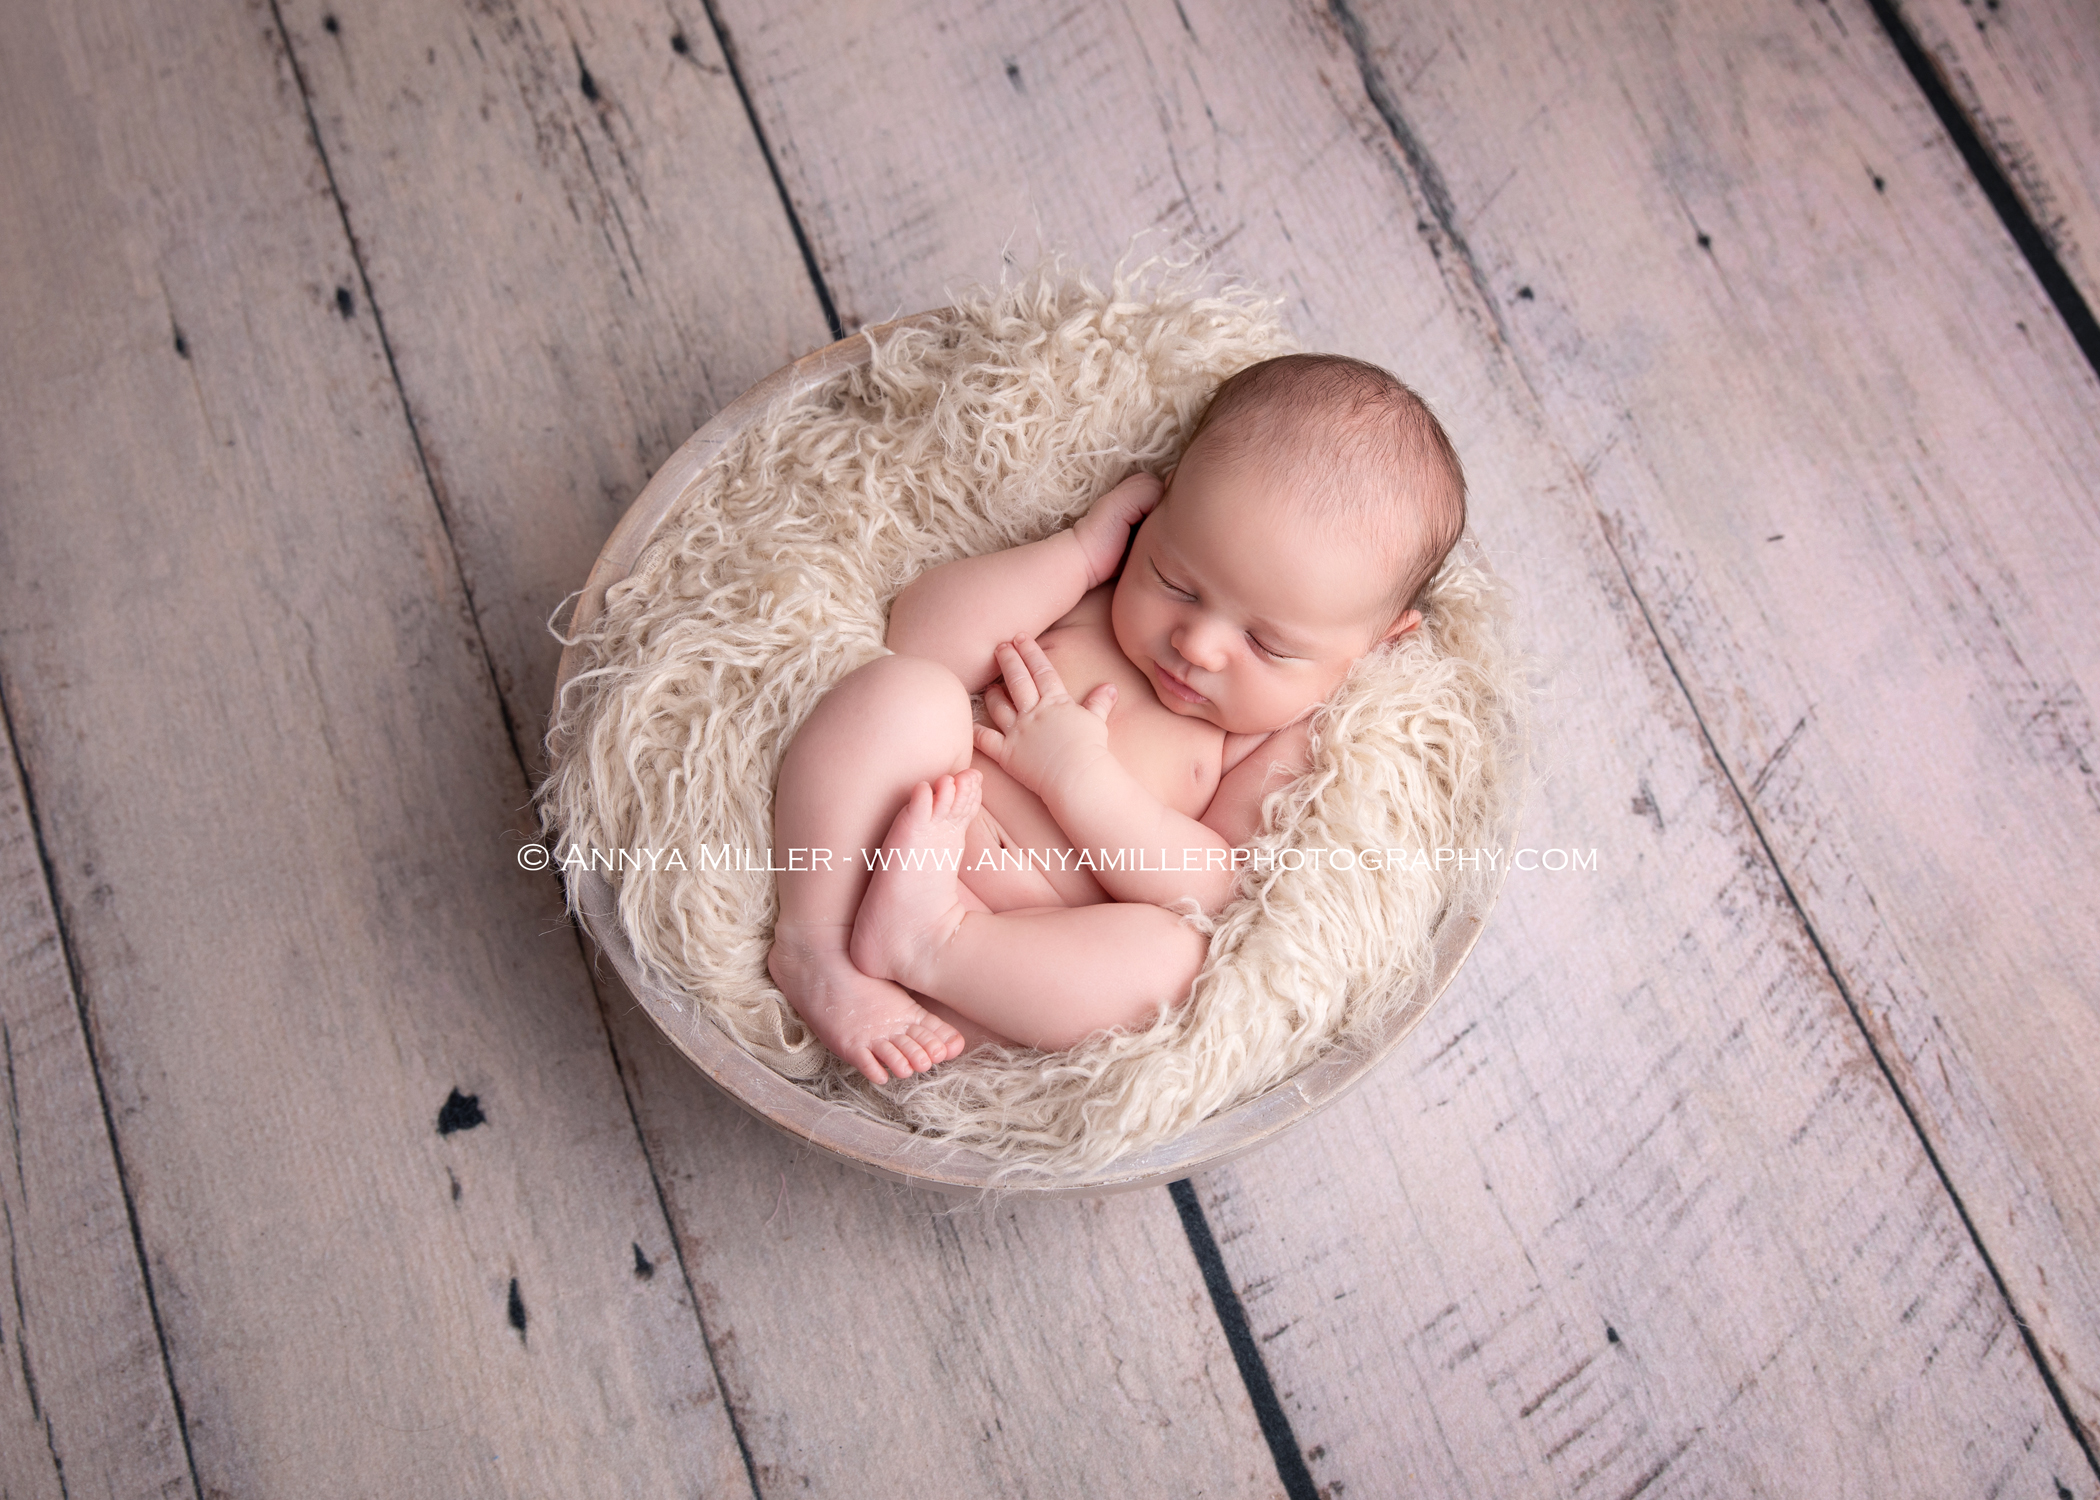 Toronto newborn photos of brand new baby boy by Annya Miller Photography 